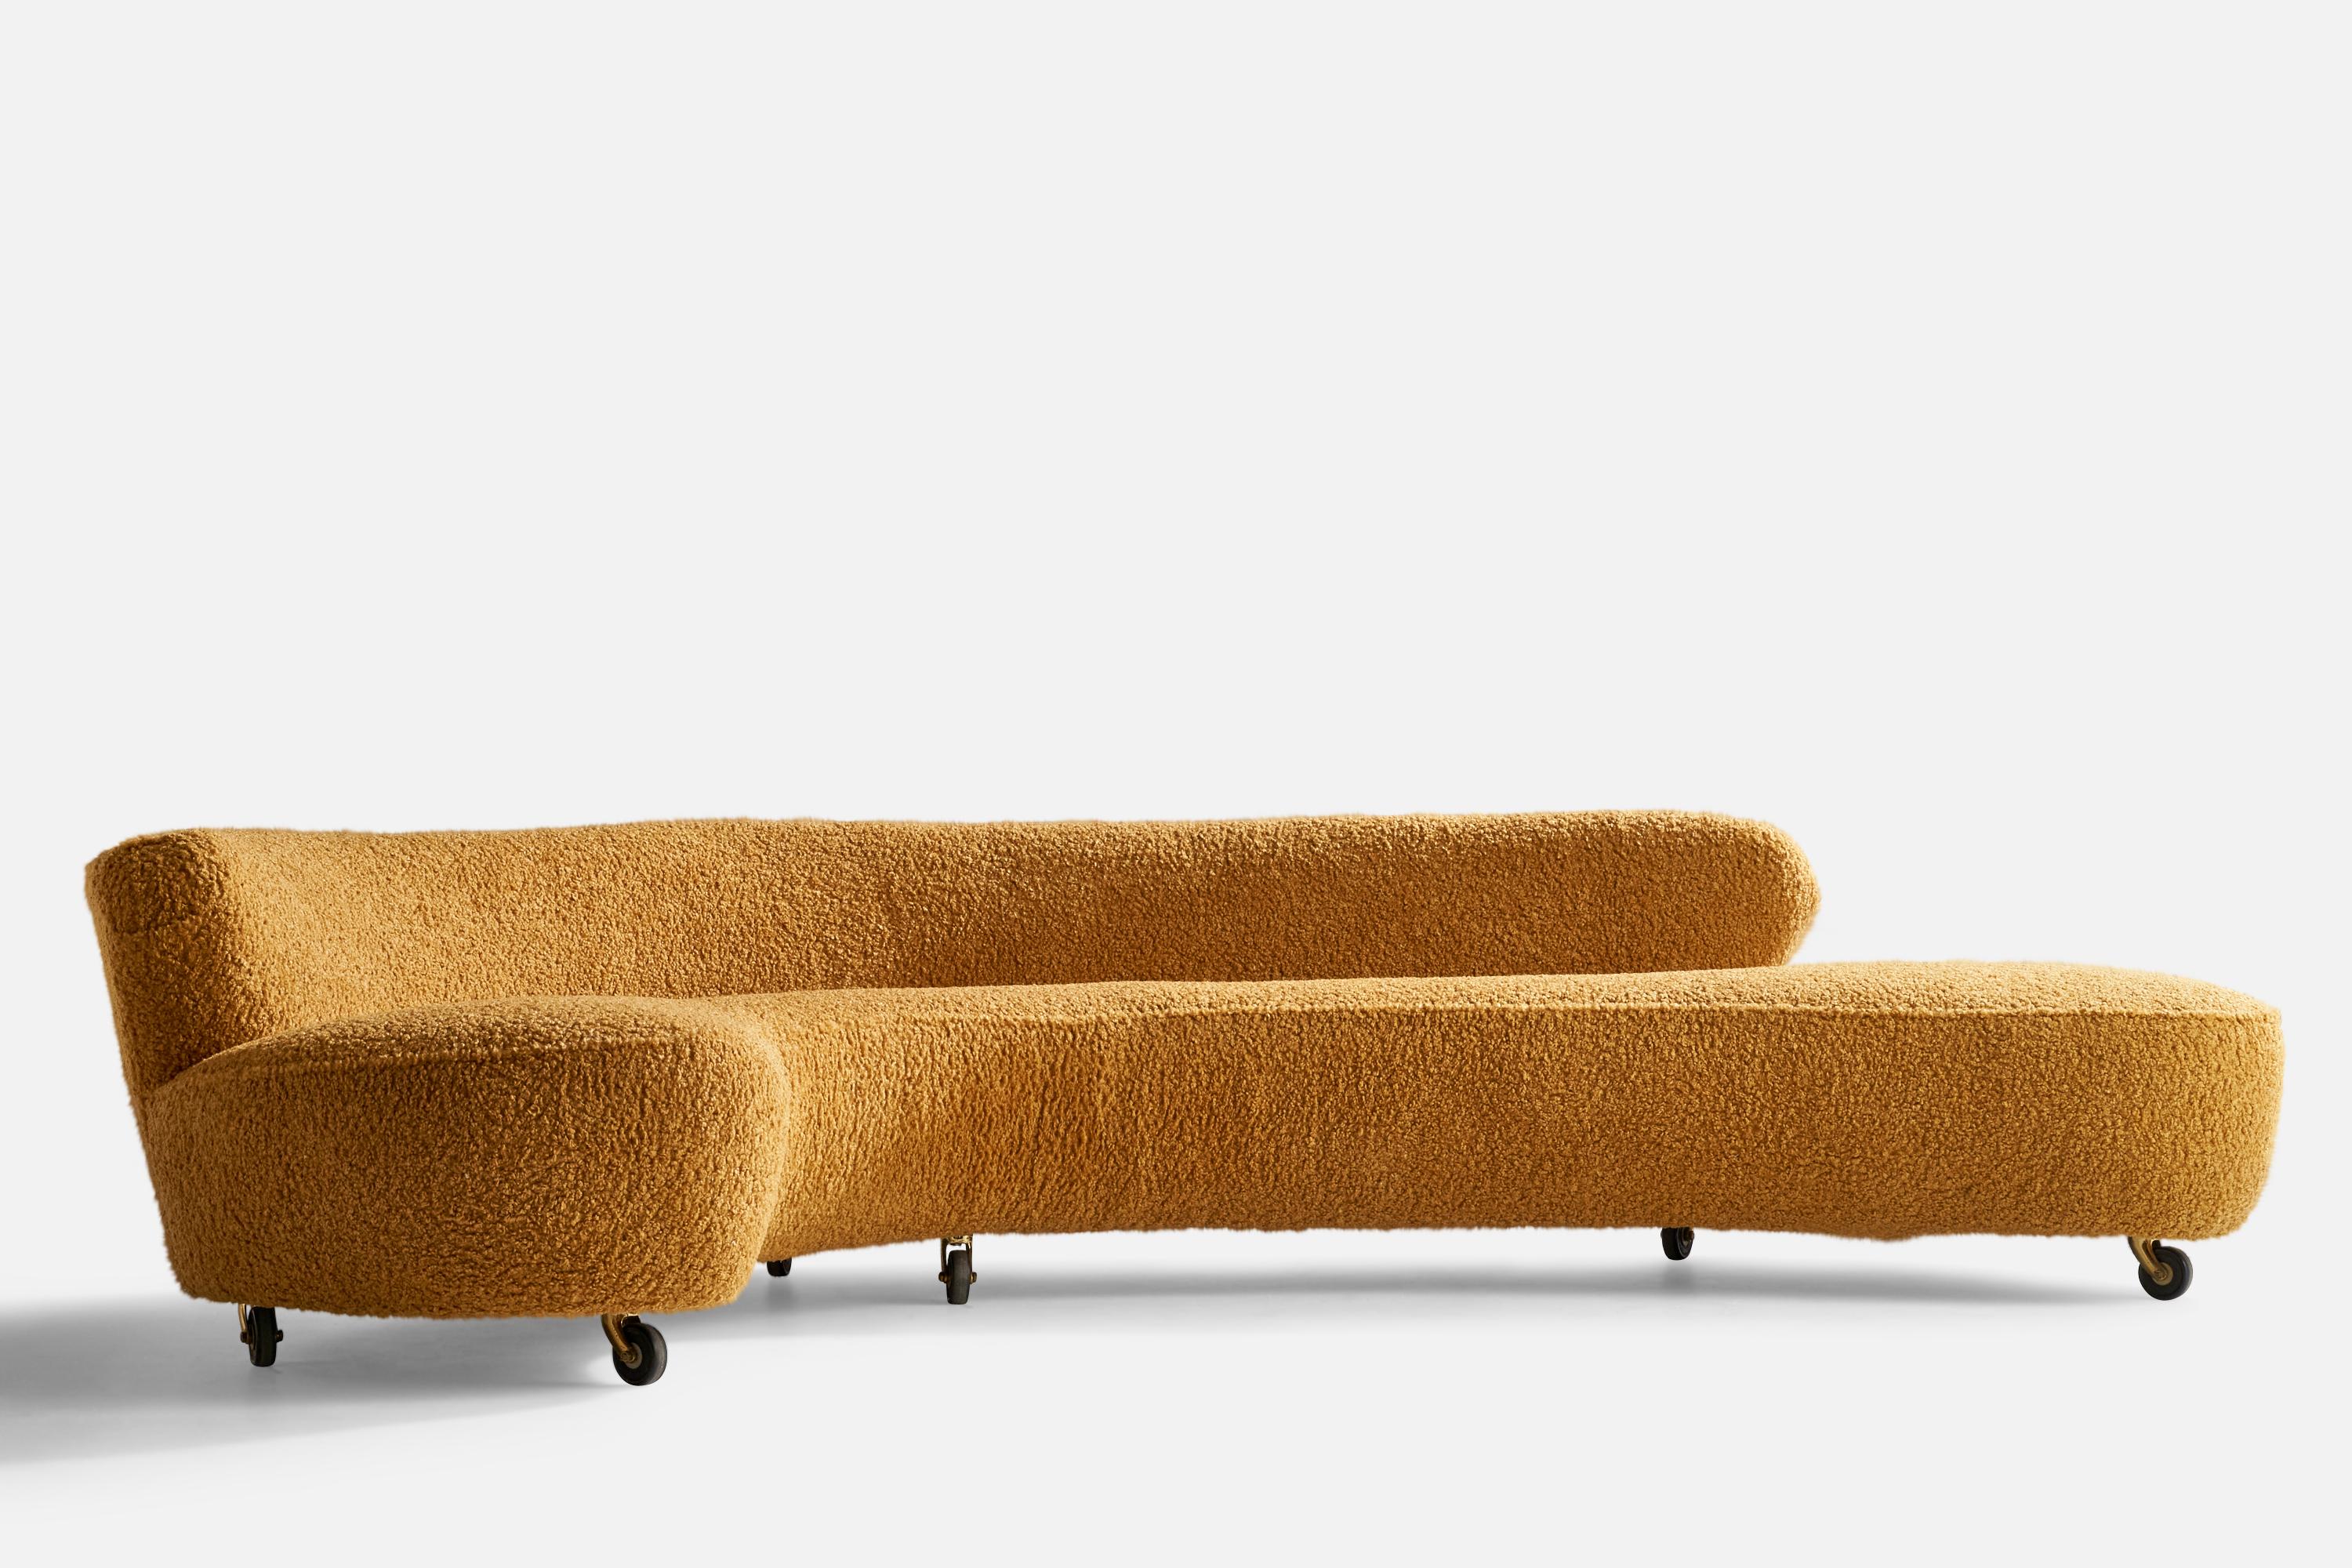 Mid-20th Century Vladimir Kagan, Large Curved Sofa, Fabric, Metal, USA, 1950s For Sale